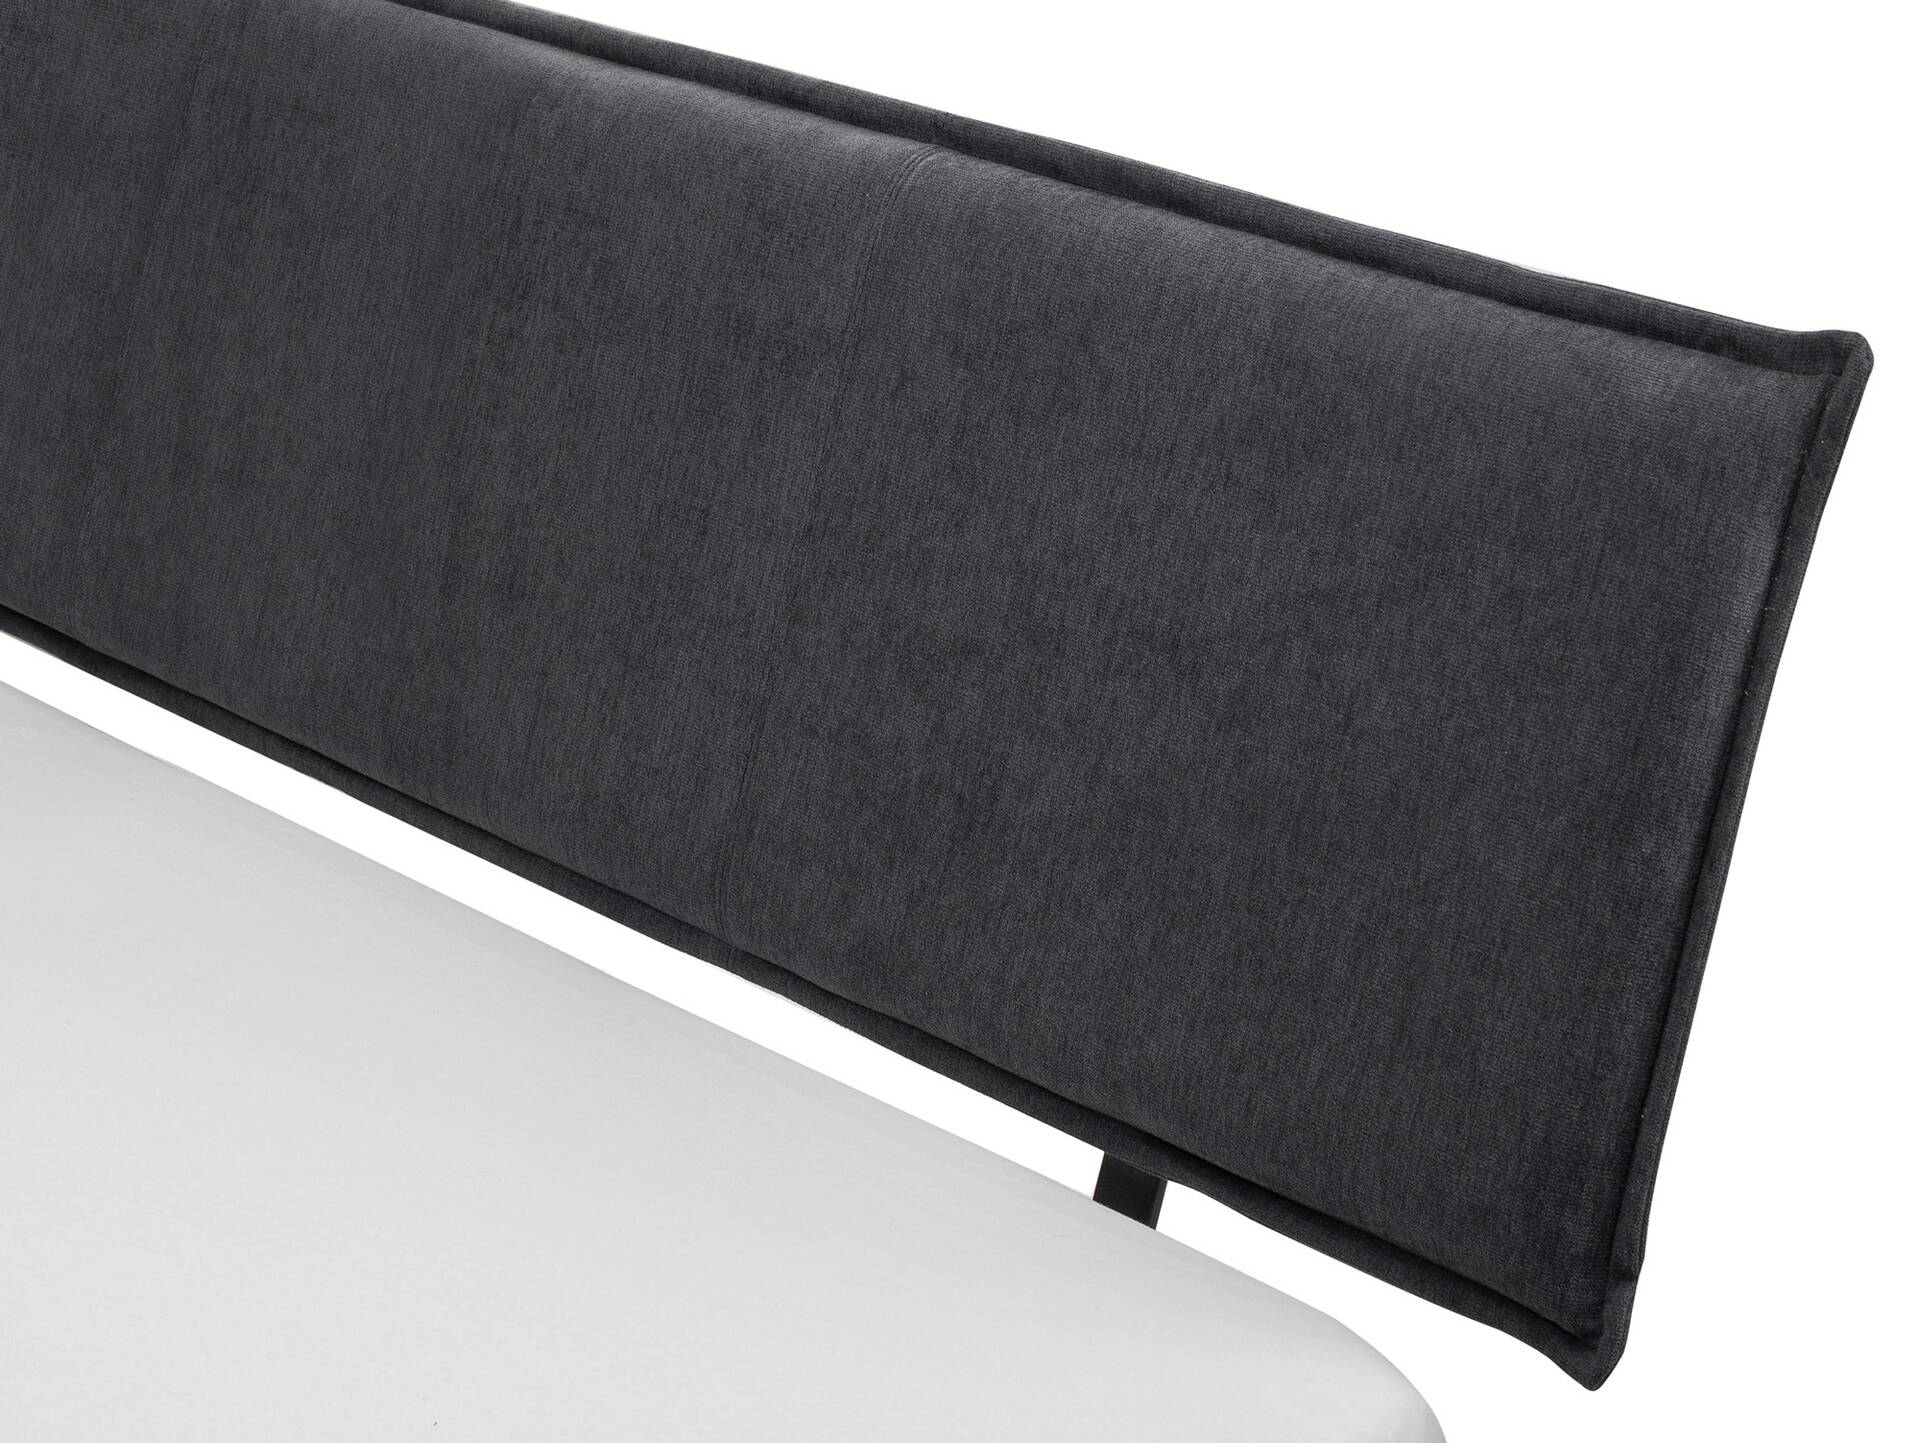 CALIDO 4-Fuß-Bett mit Polster-Kopfteil, Material Massivholz 120 x 220 cm | Buche weiss lackiert | Stoff Anthrazit | Komforthöhe